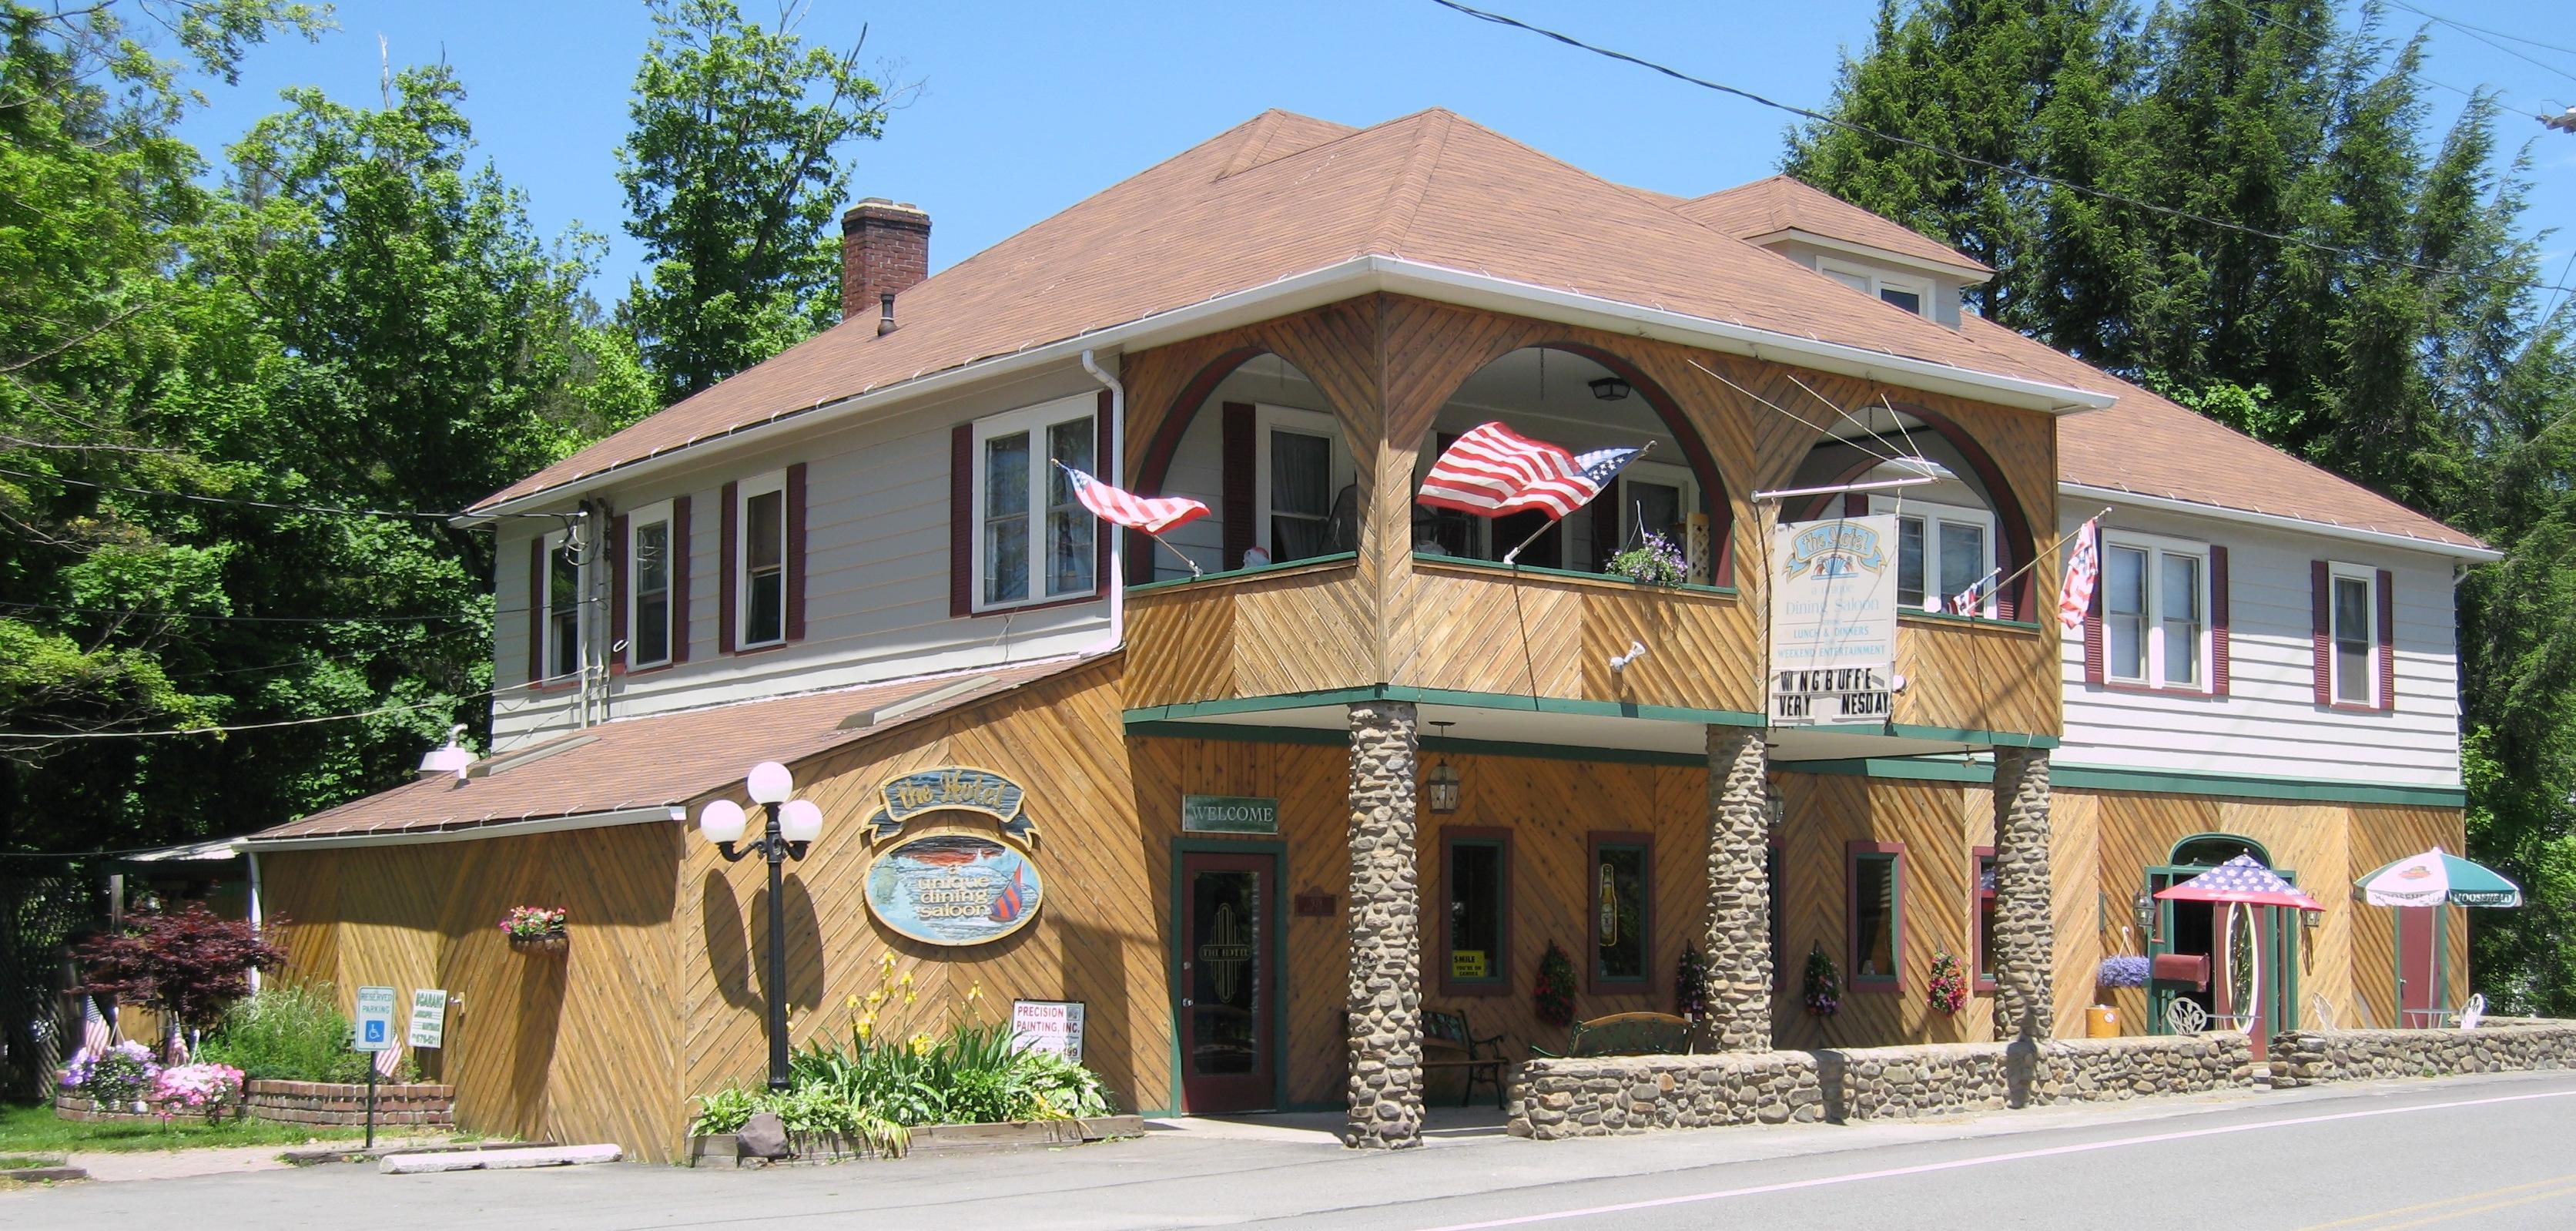 The Hotel Restaurant in Newfoundland Pennsylvania Wayne County in the Pocono Mountains